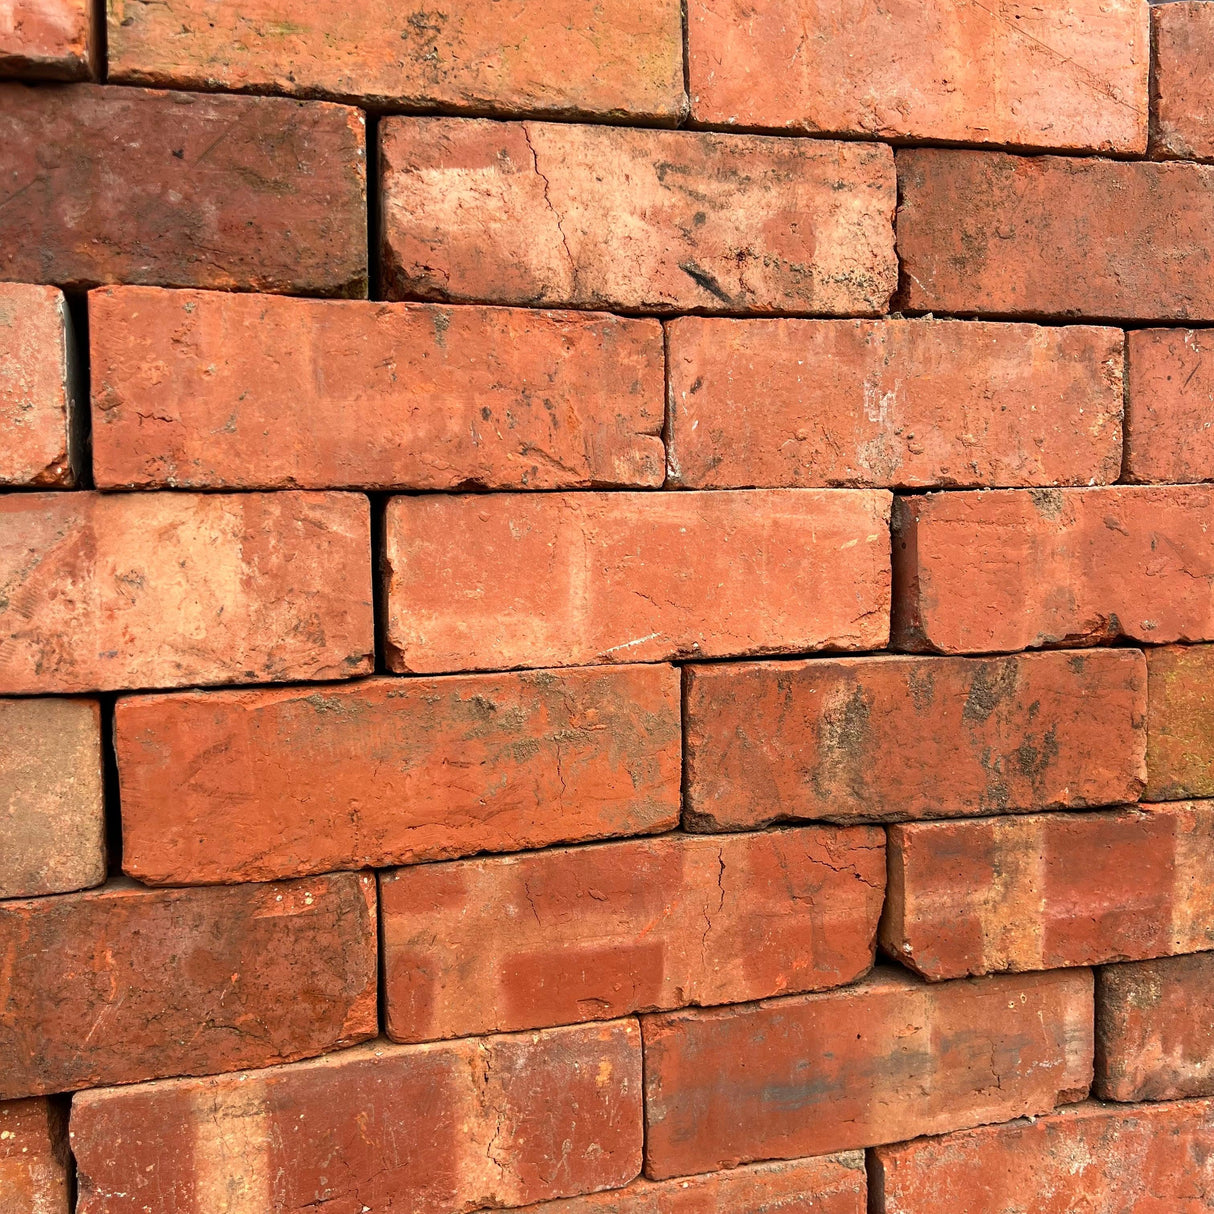 Reclaimed Baldwin Pressed Bricks | Pack of 250 Bricks | Free Delivery - Reclaimed Brick Company